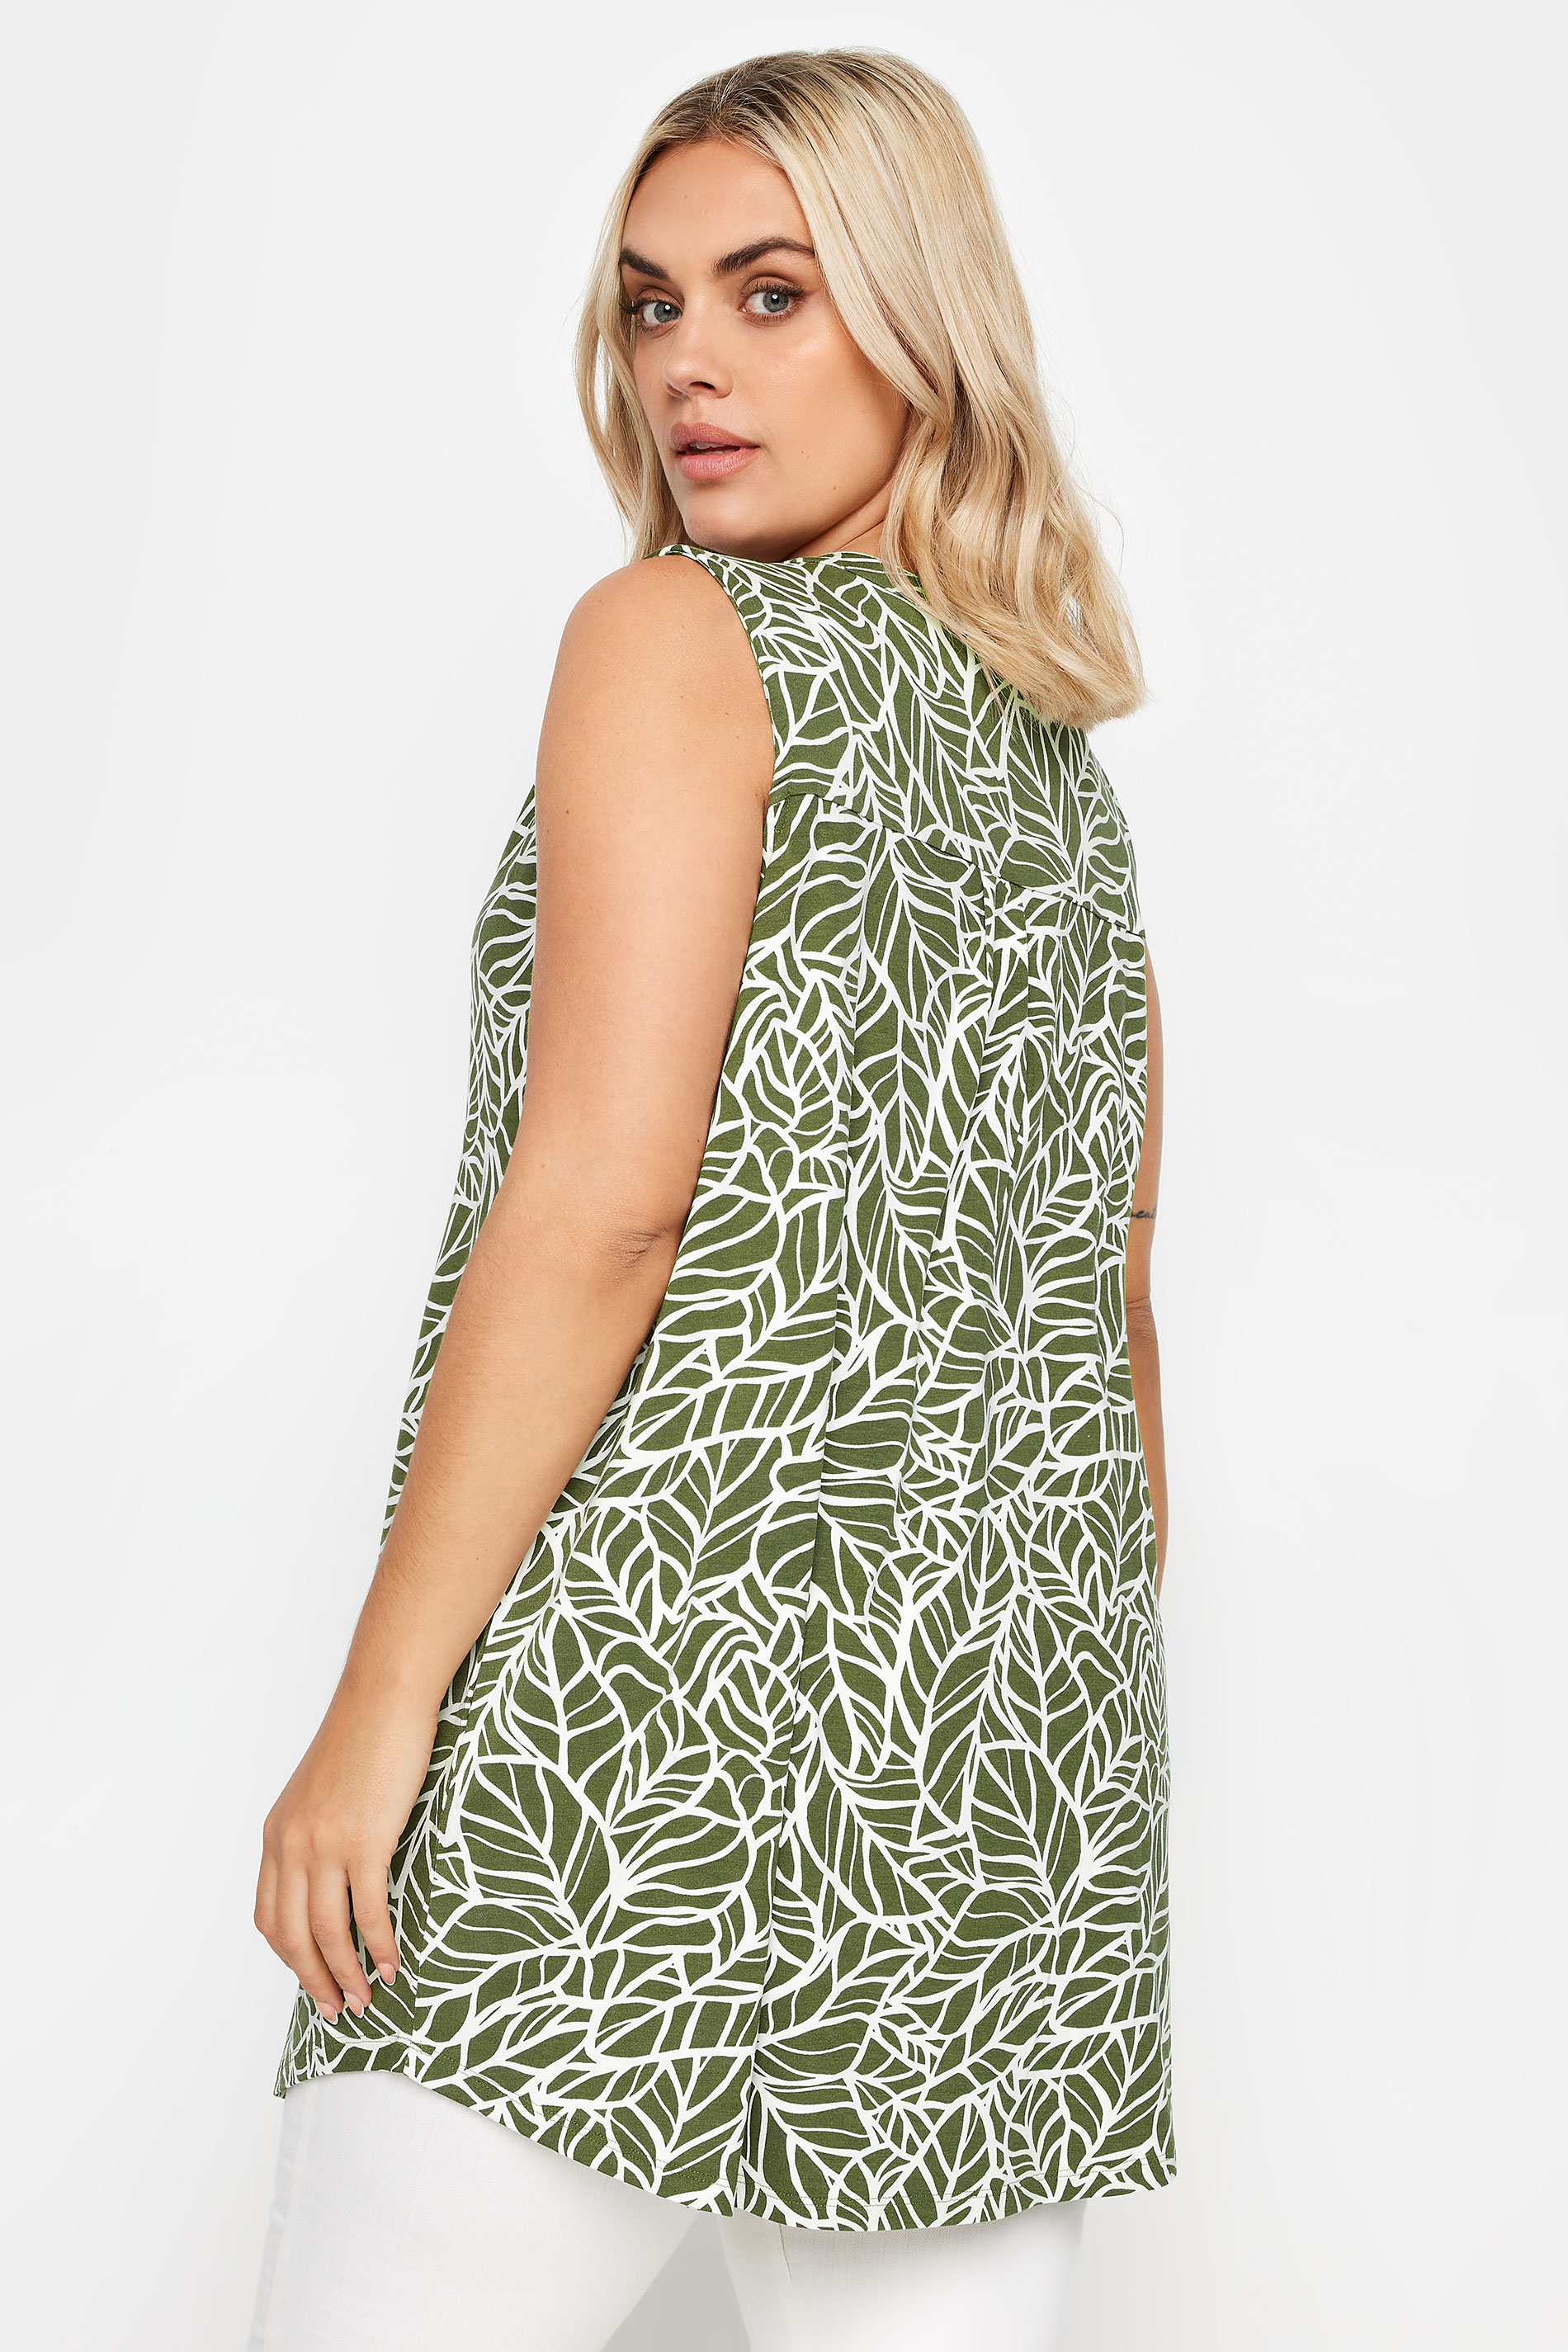 YOURS Plus Size Khaki Green Leaf Print Sleeveless Blouse | Yours Clothing 3